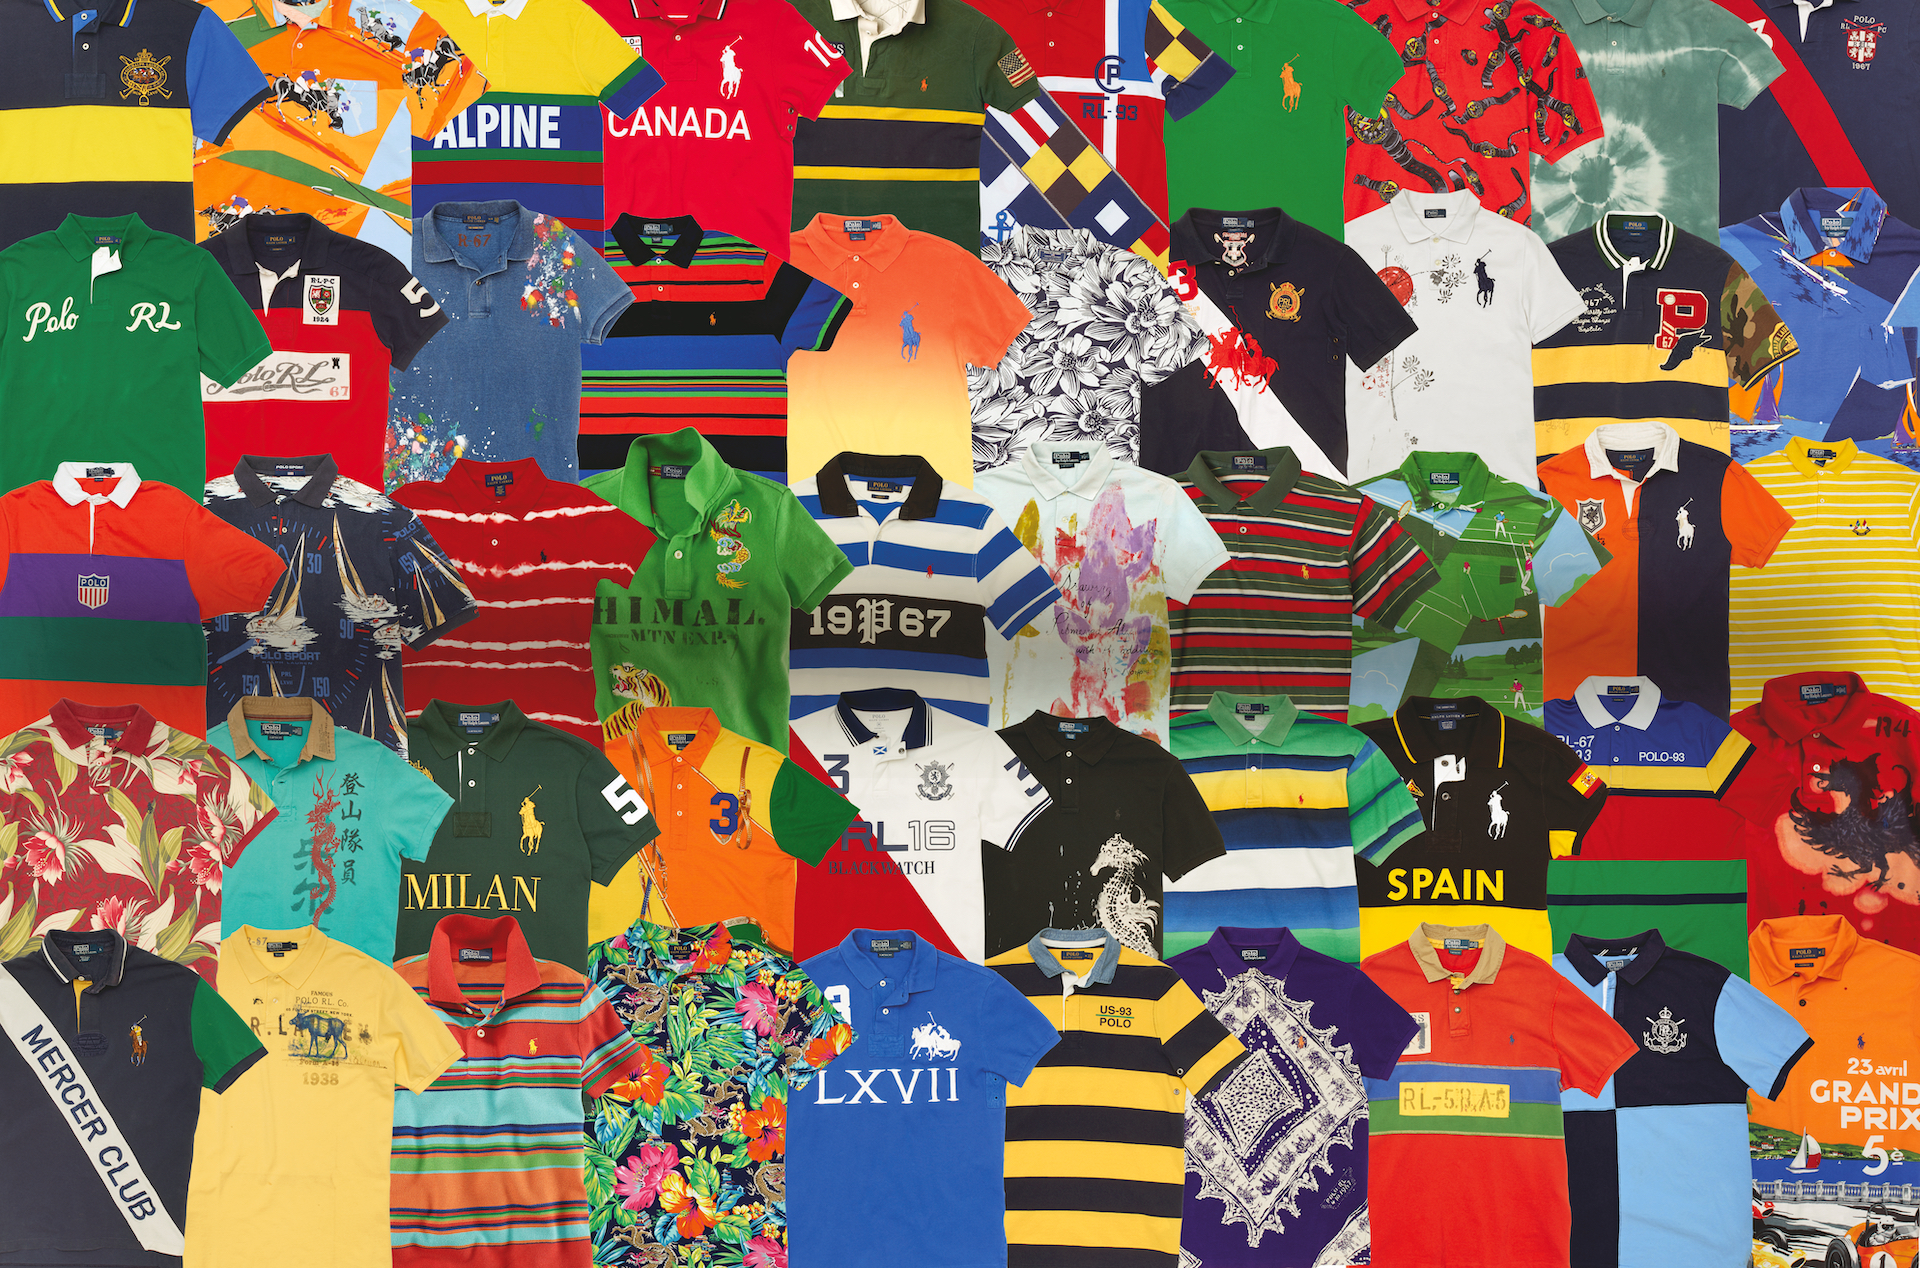 David Lauren Speaks on The 50th Anniversary of Ralph Lauren's Polo Shirt